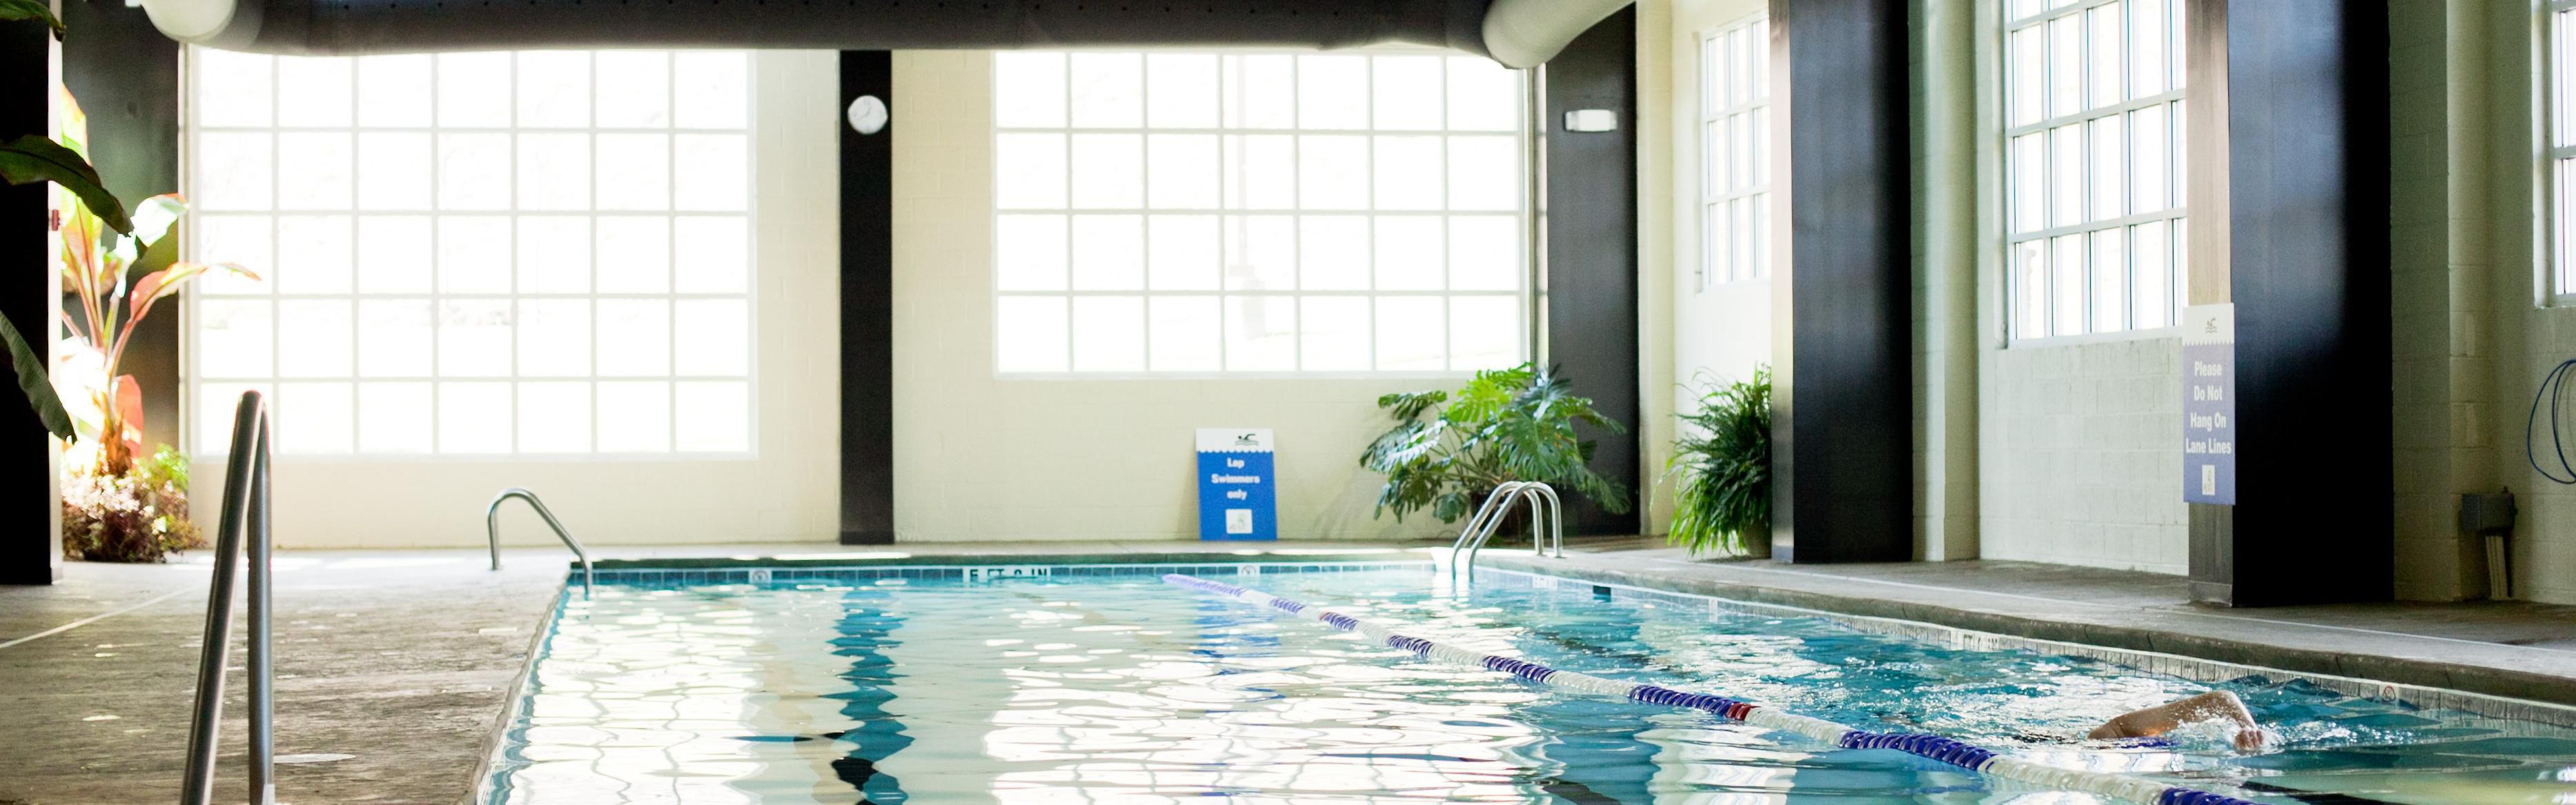 Crowne Plaza Resort Asheville Indoor Salt Water Lap Pool